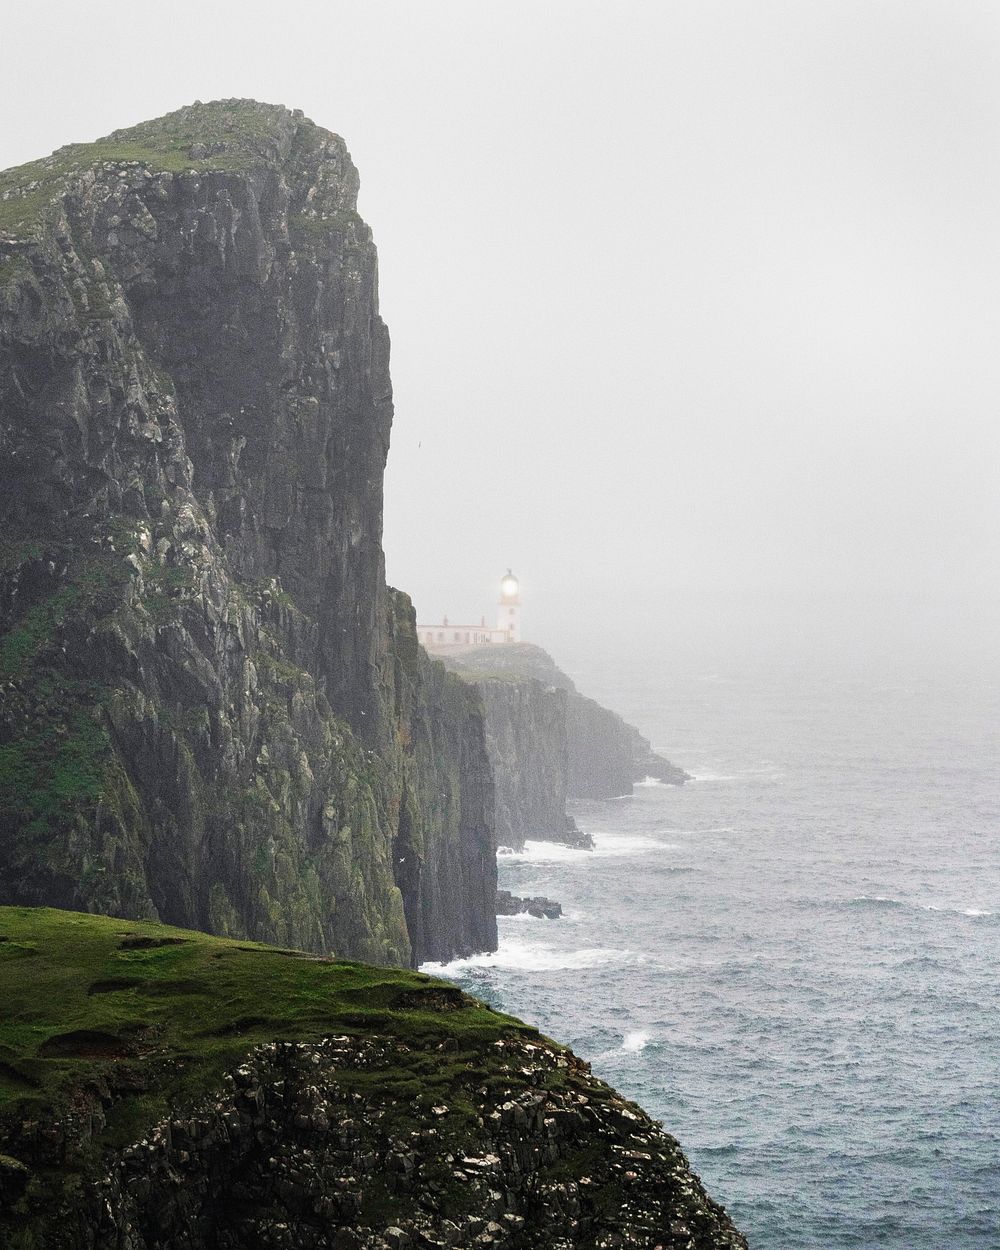 Misty Neist Point Lighthouse at Isle of Skye, Scotland